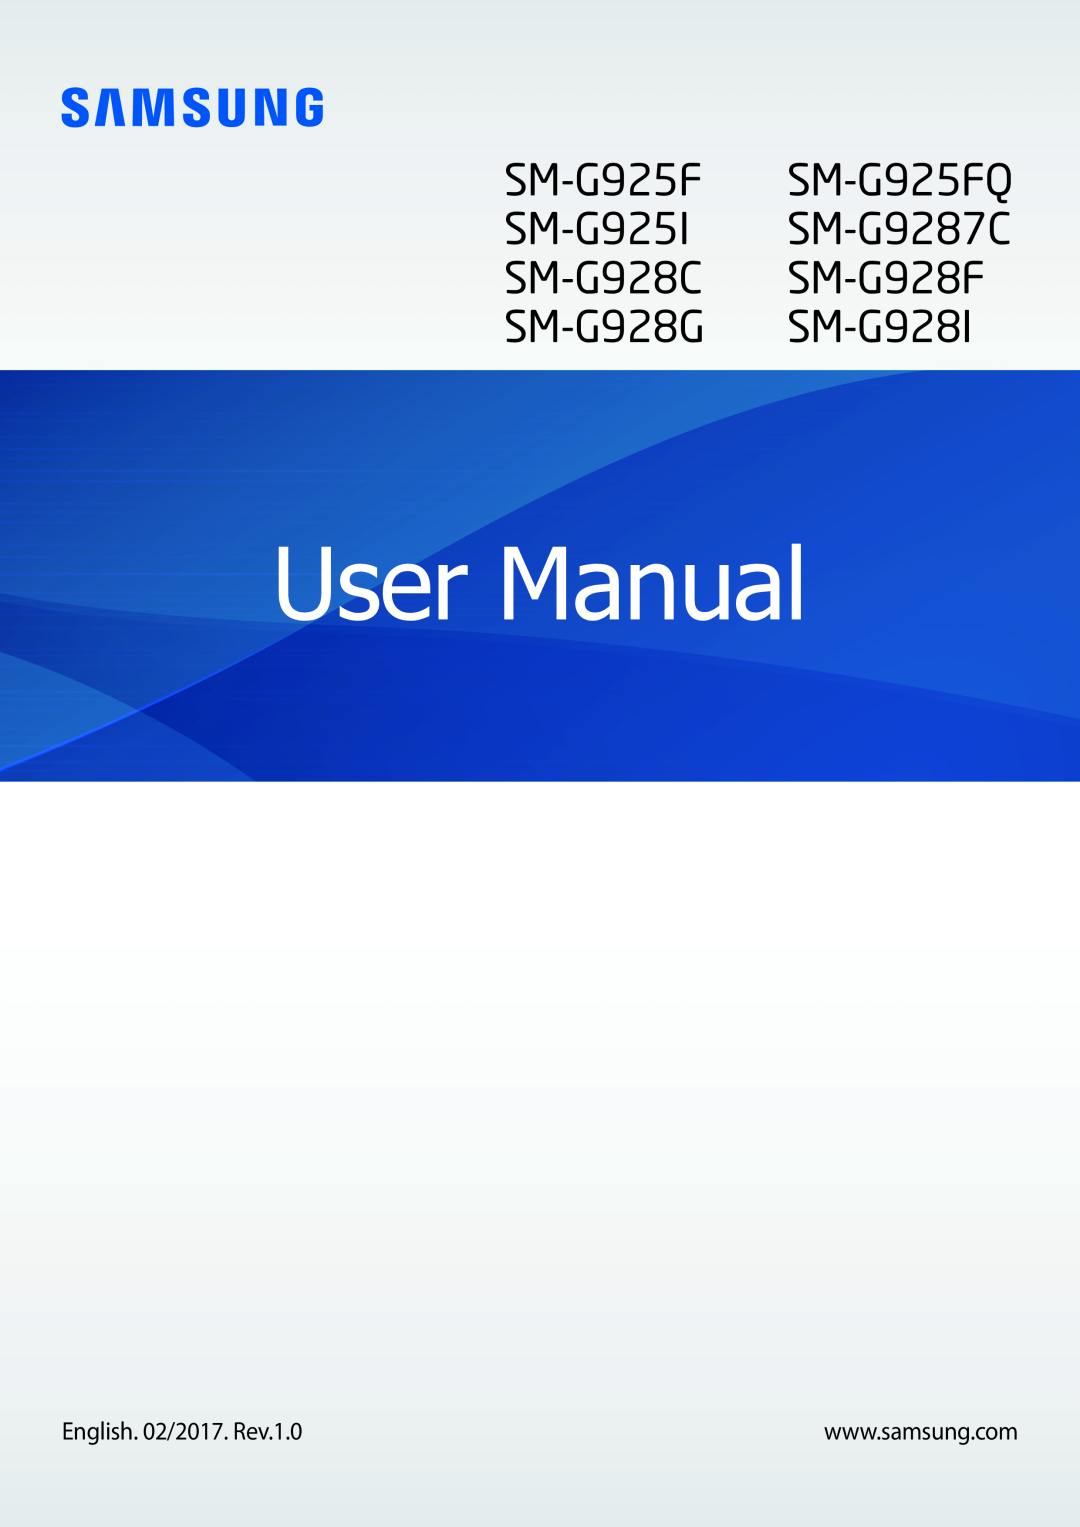 Samsung SM-G925FZWEDBT manual User Manual, SM-G925F SM-G925FQ SM-G925I SM-G9287C SM-G928C SM-G928F, SM-G928G SM-G928I 